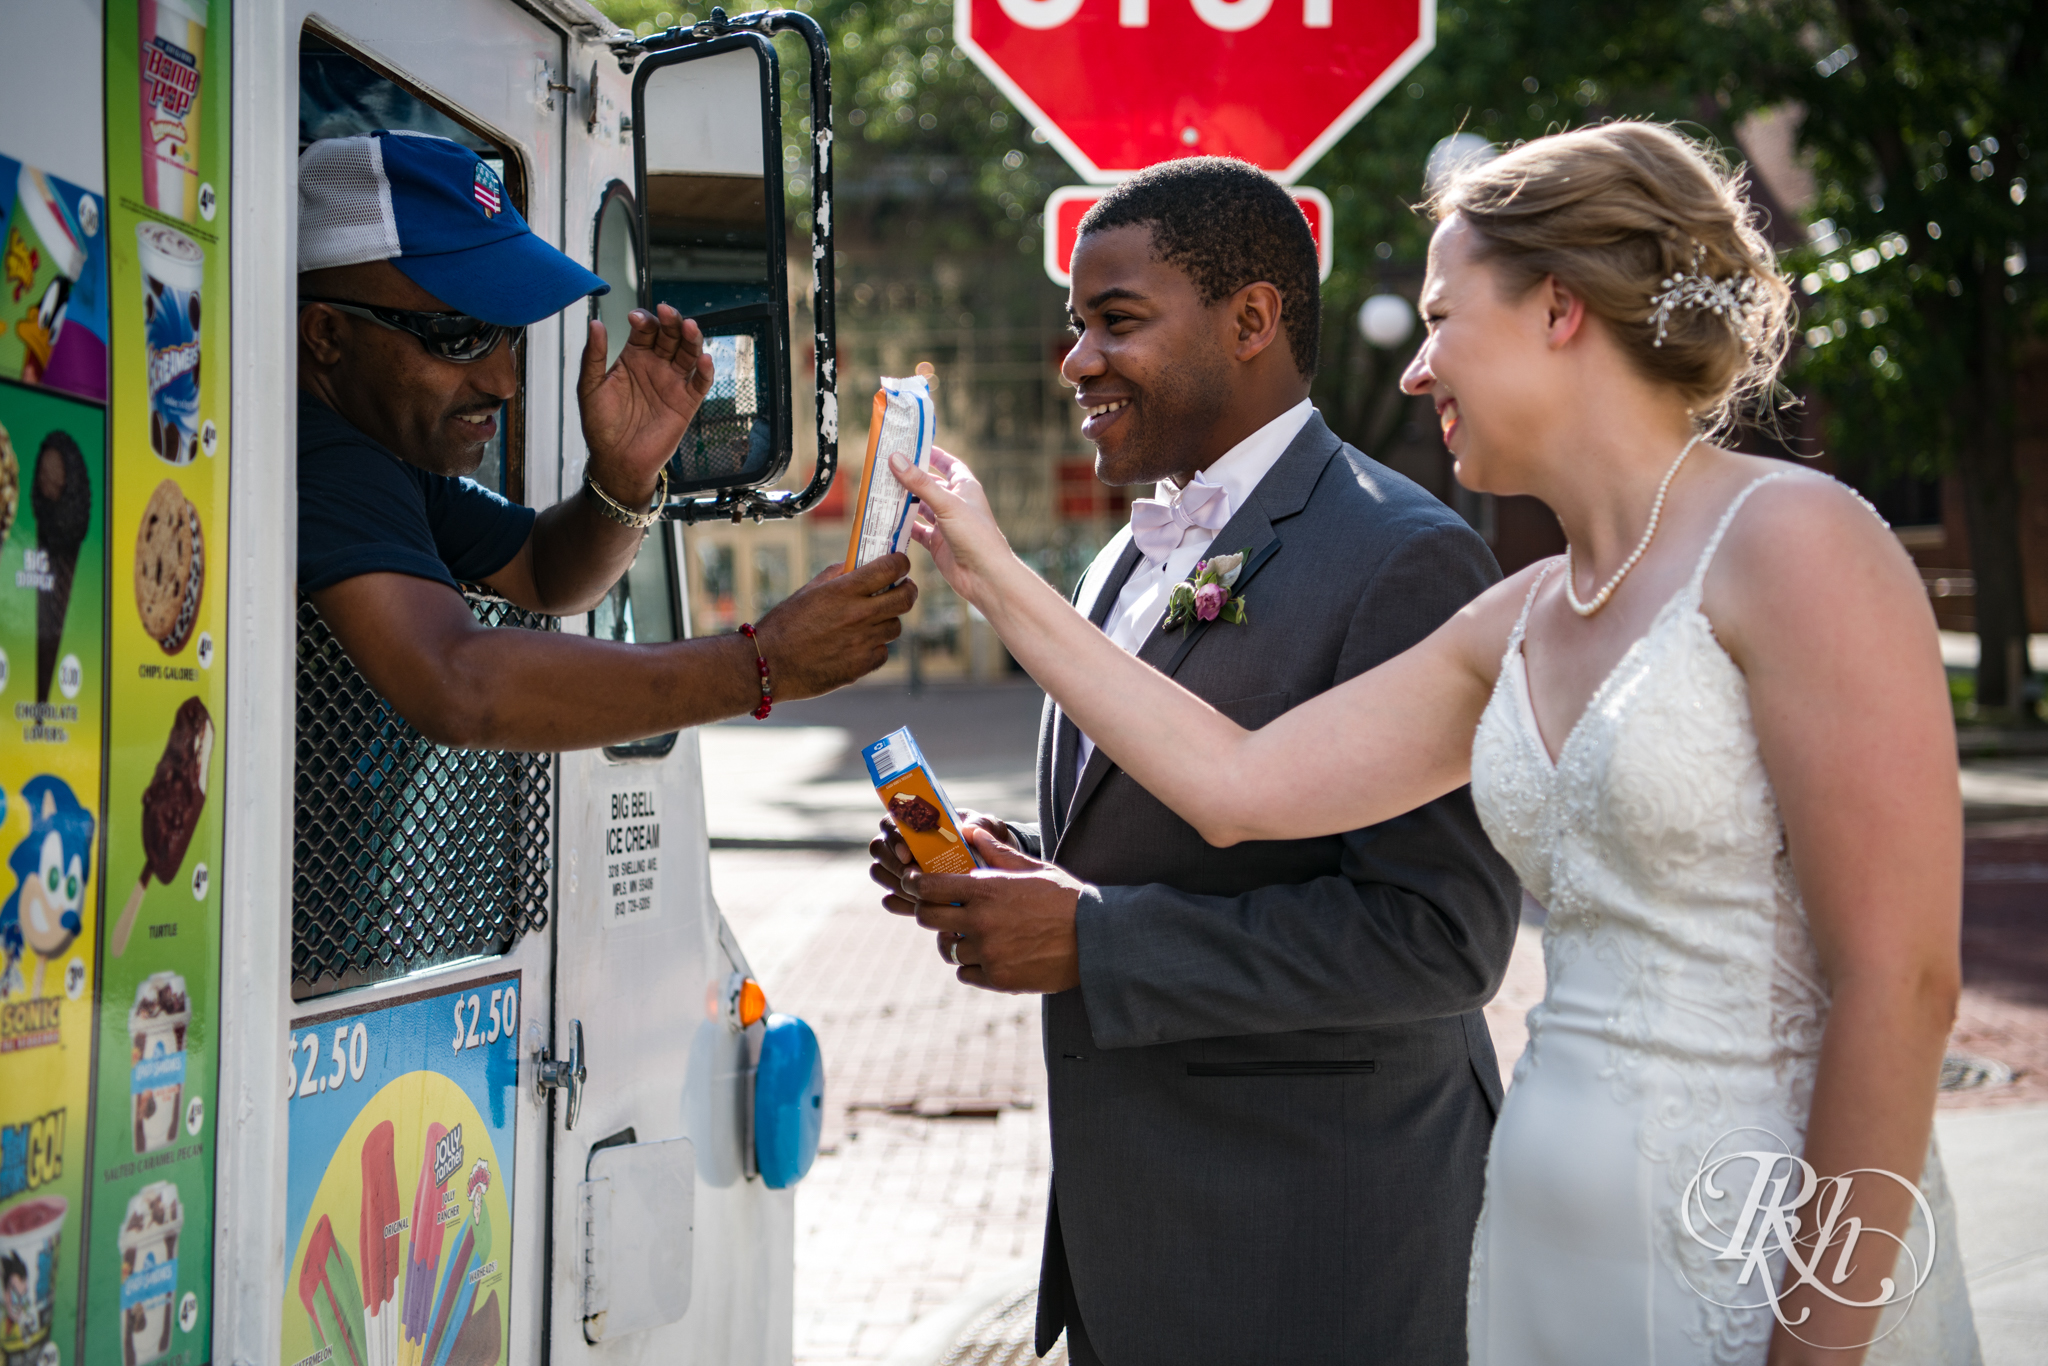 Black groom and white bride buy ice cream from ice cream truck in Saint Paul, Minnesota.